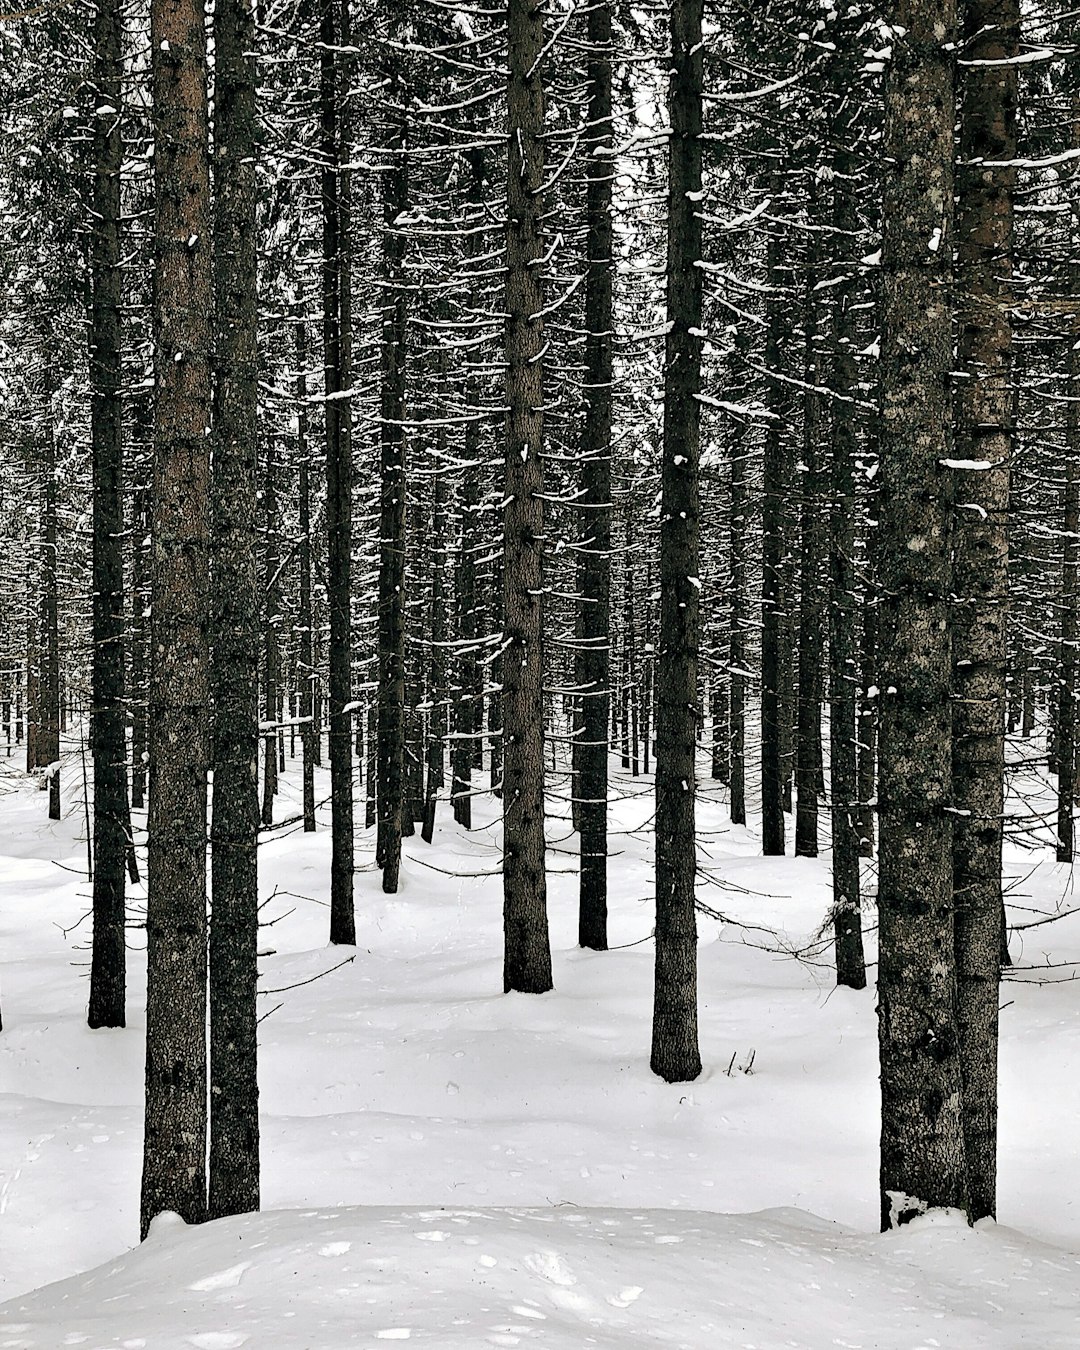 Spruce-fir forest photo spot Paneveggio - Pale di San Martino Naturpark Fanes-Sennes-Prags